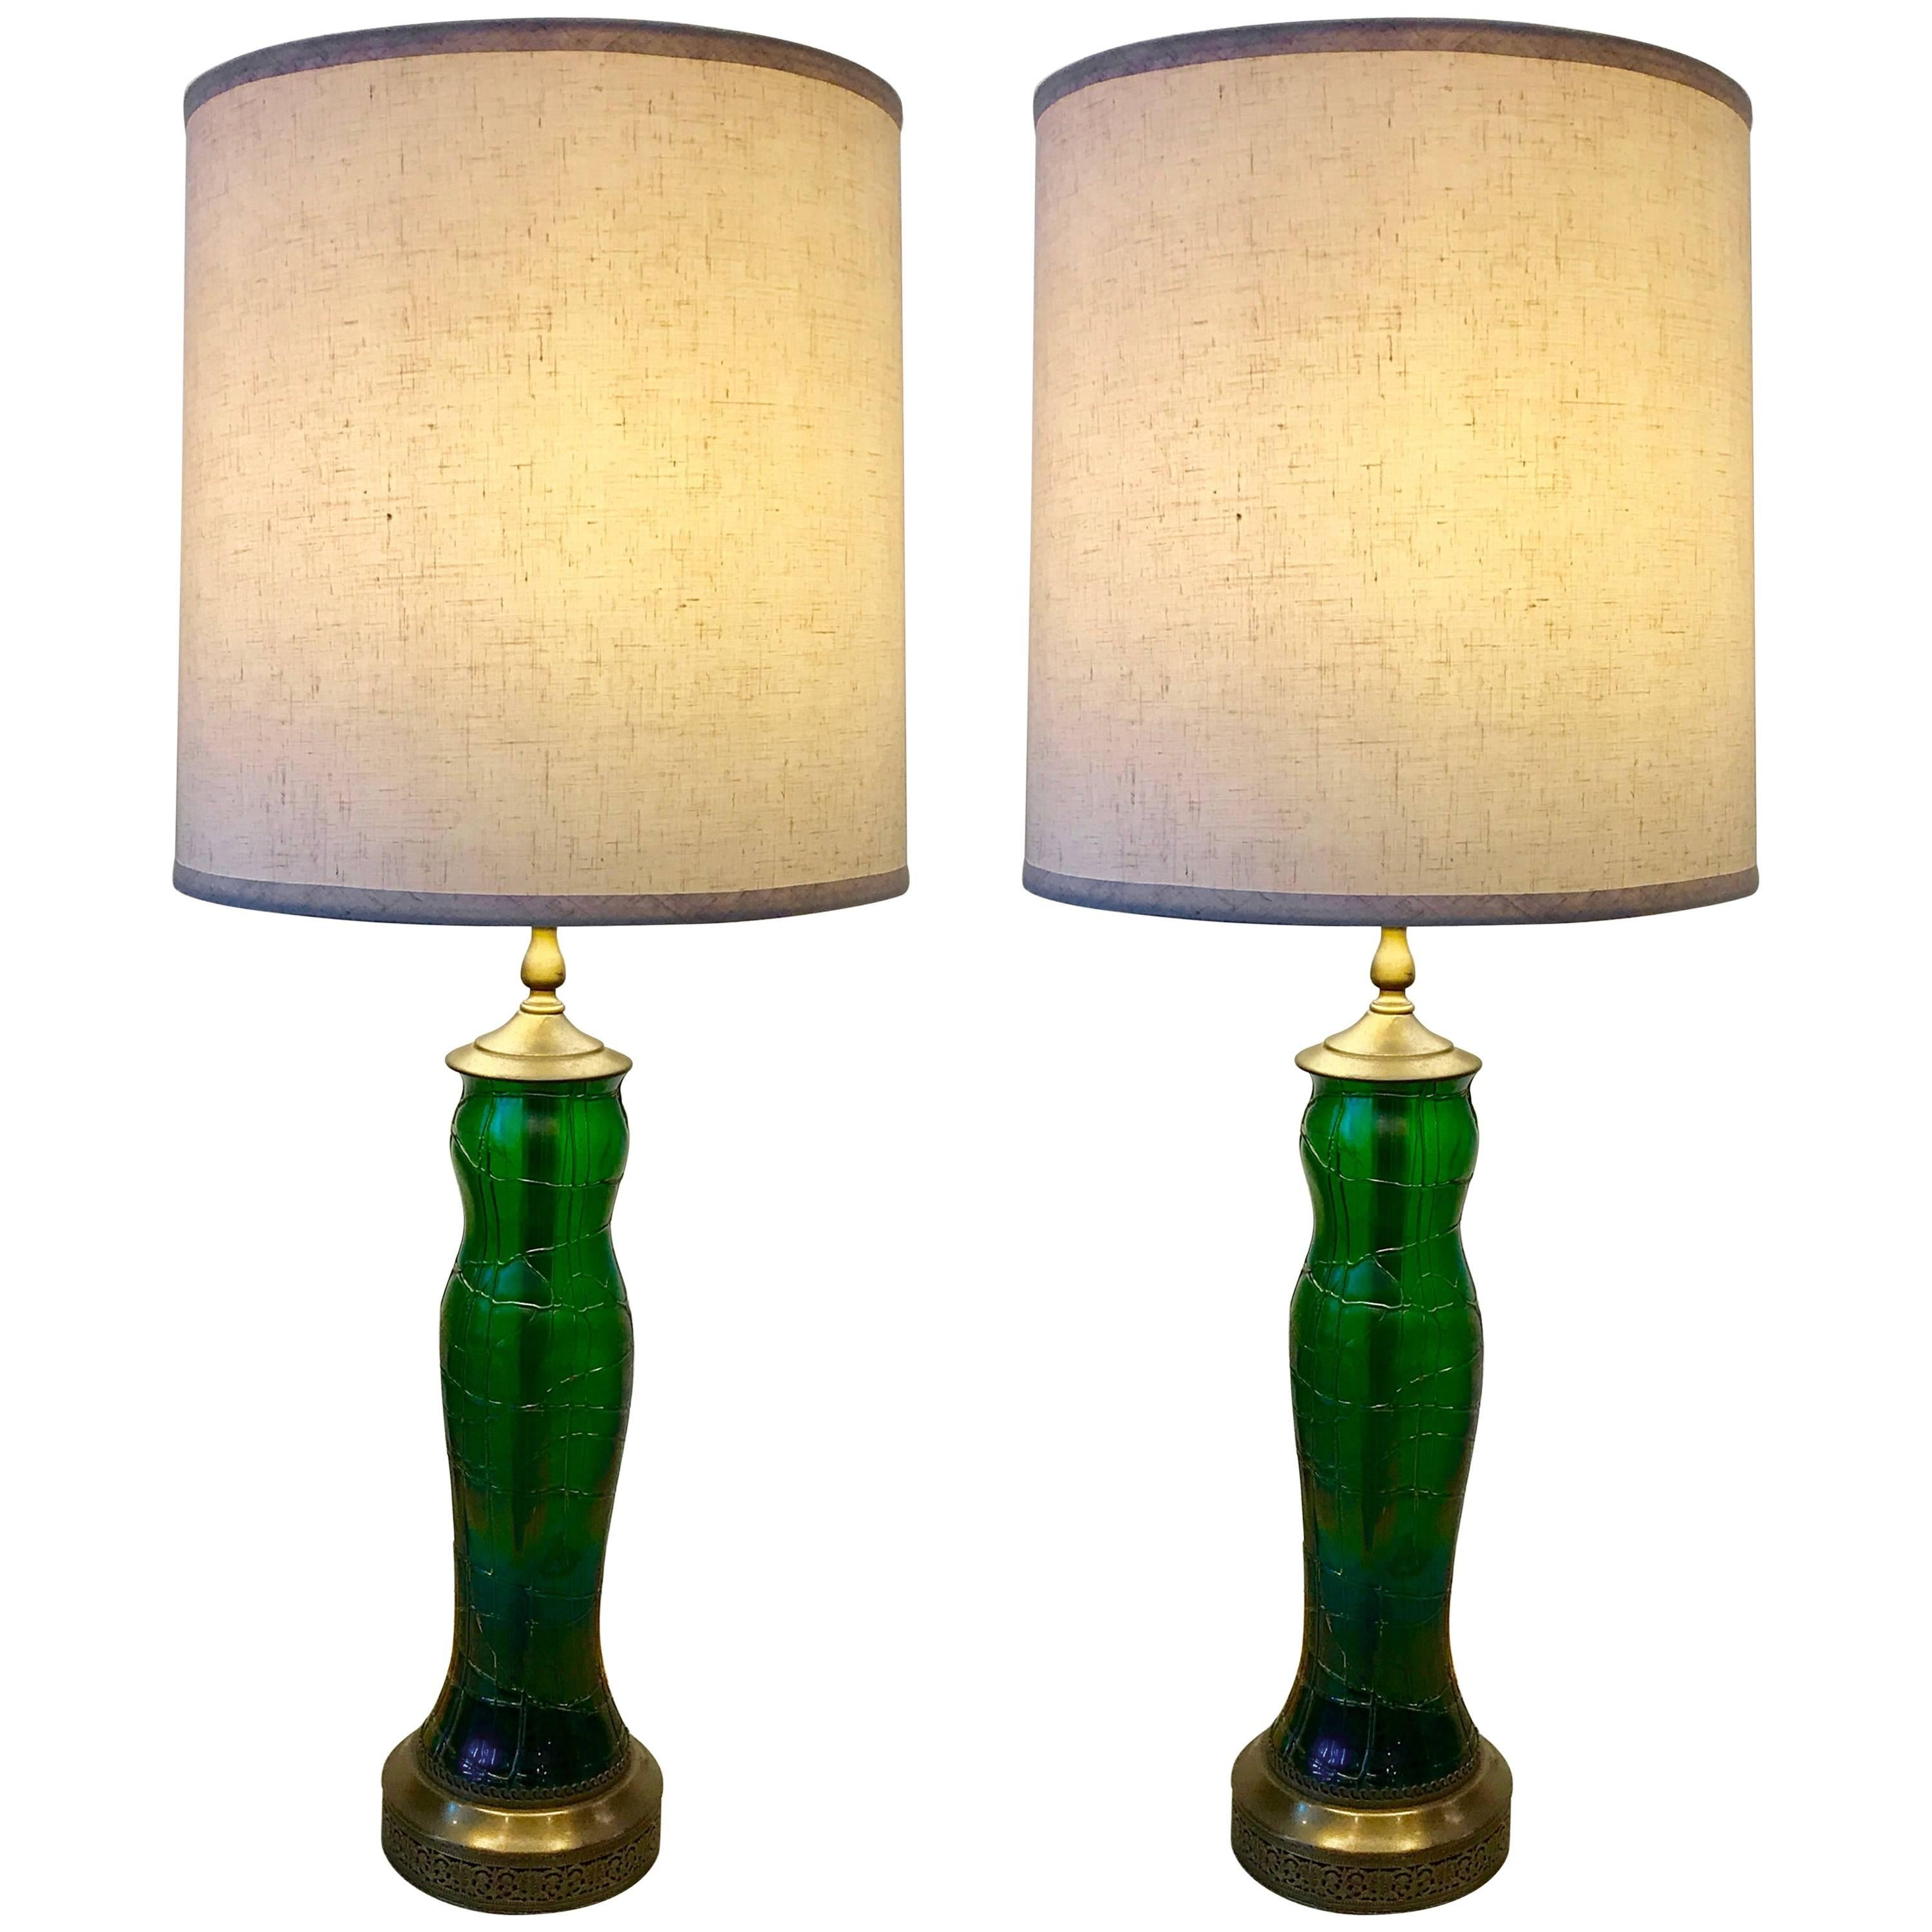 Pair of Iridescent Green Art Glass Table Lamps by Wilhelm Kralik, Art Nouveau